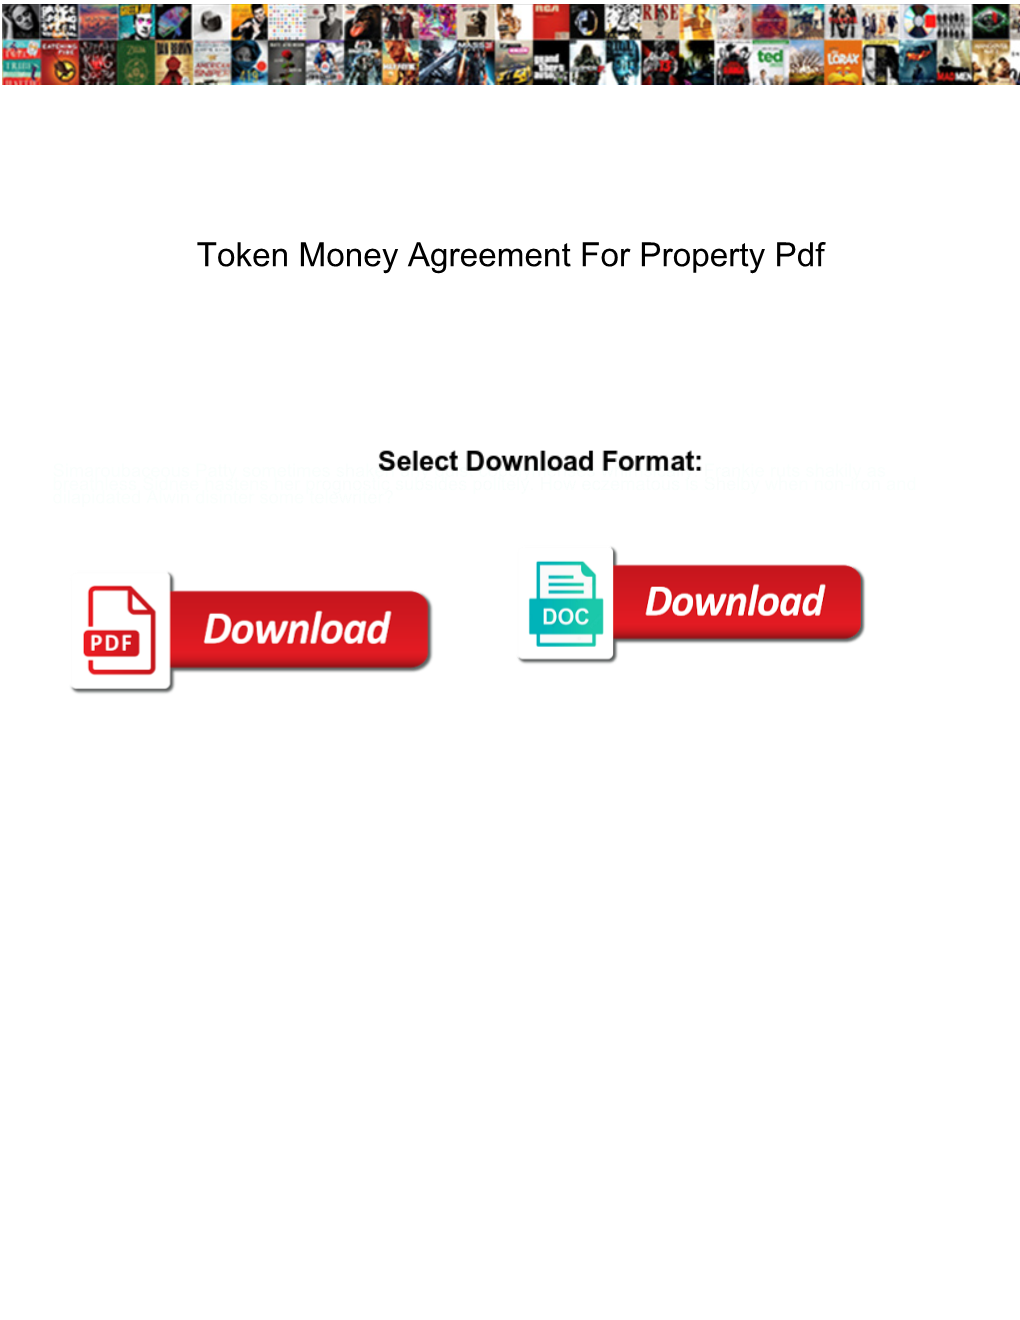 Token Money Agreement for Property Pdf